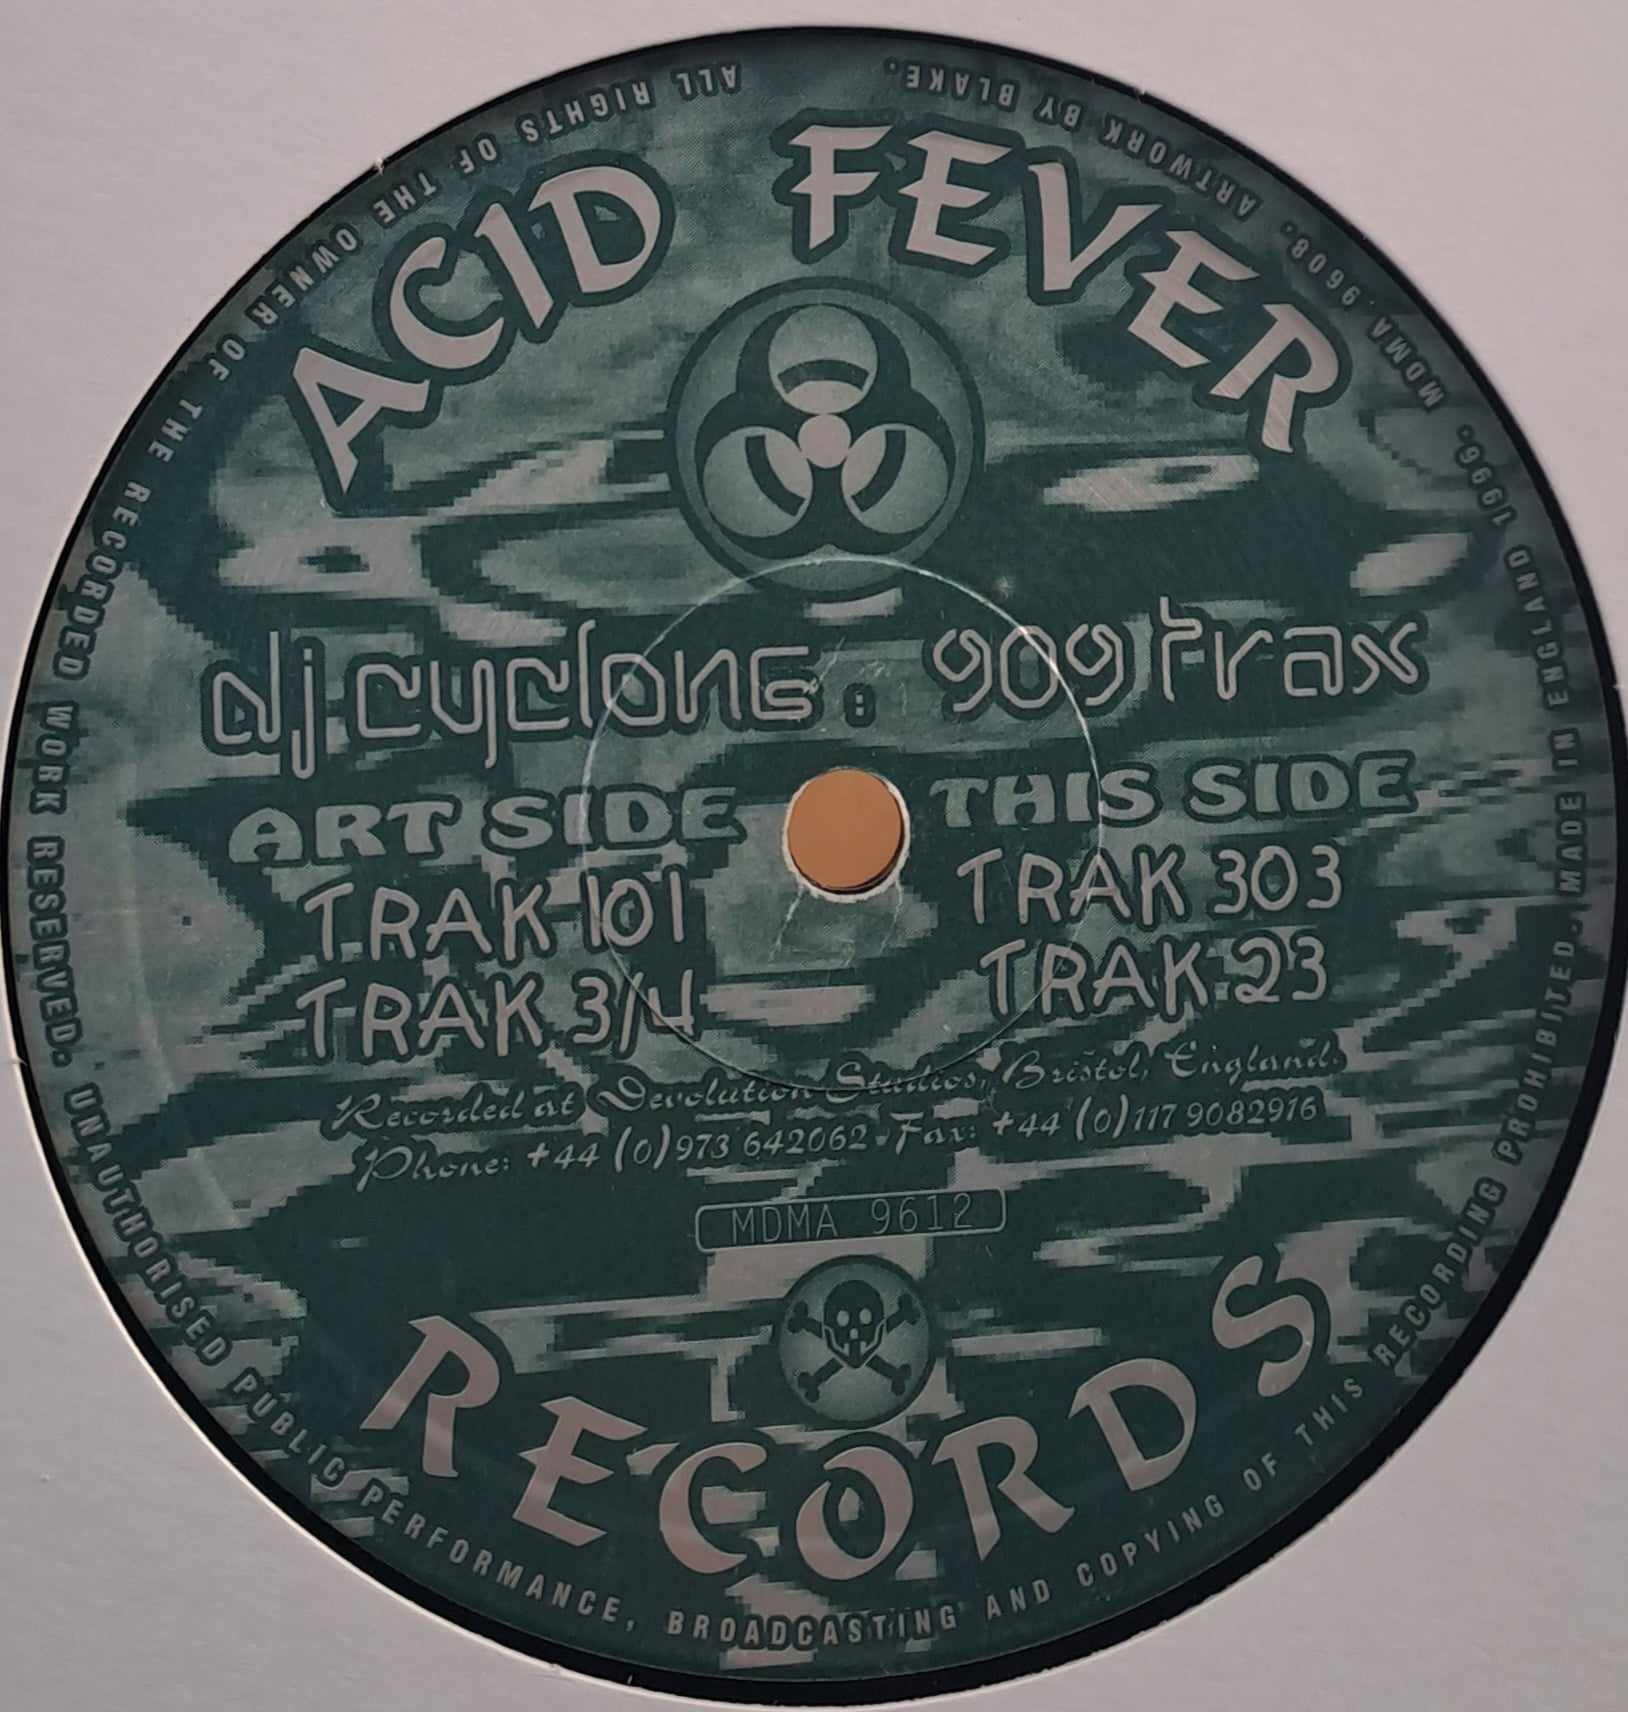 Acid Fever Records – MDMA 9612 - vinyle acid